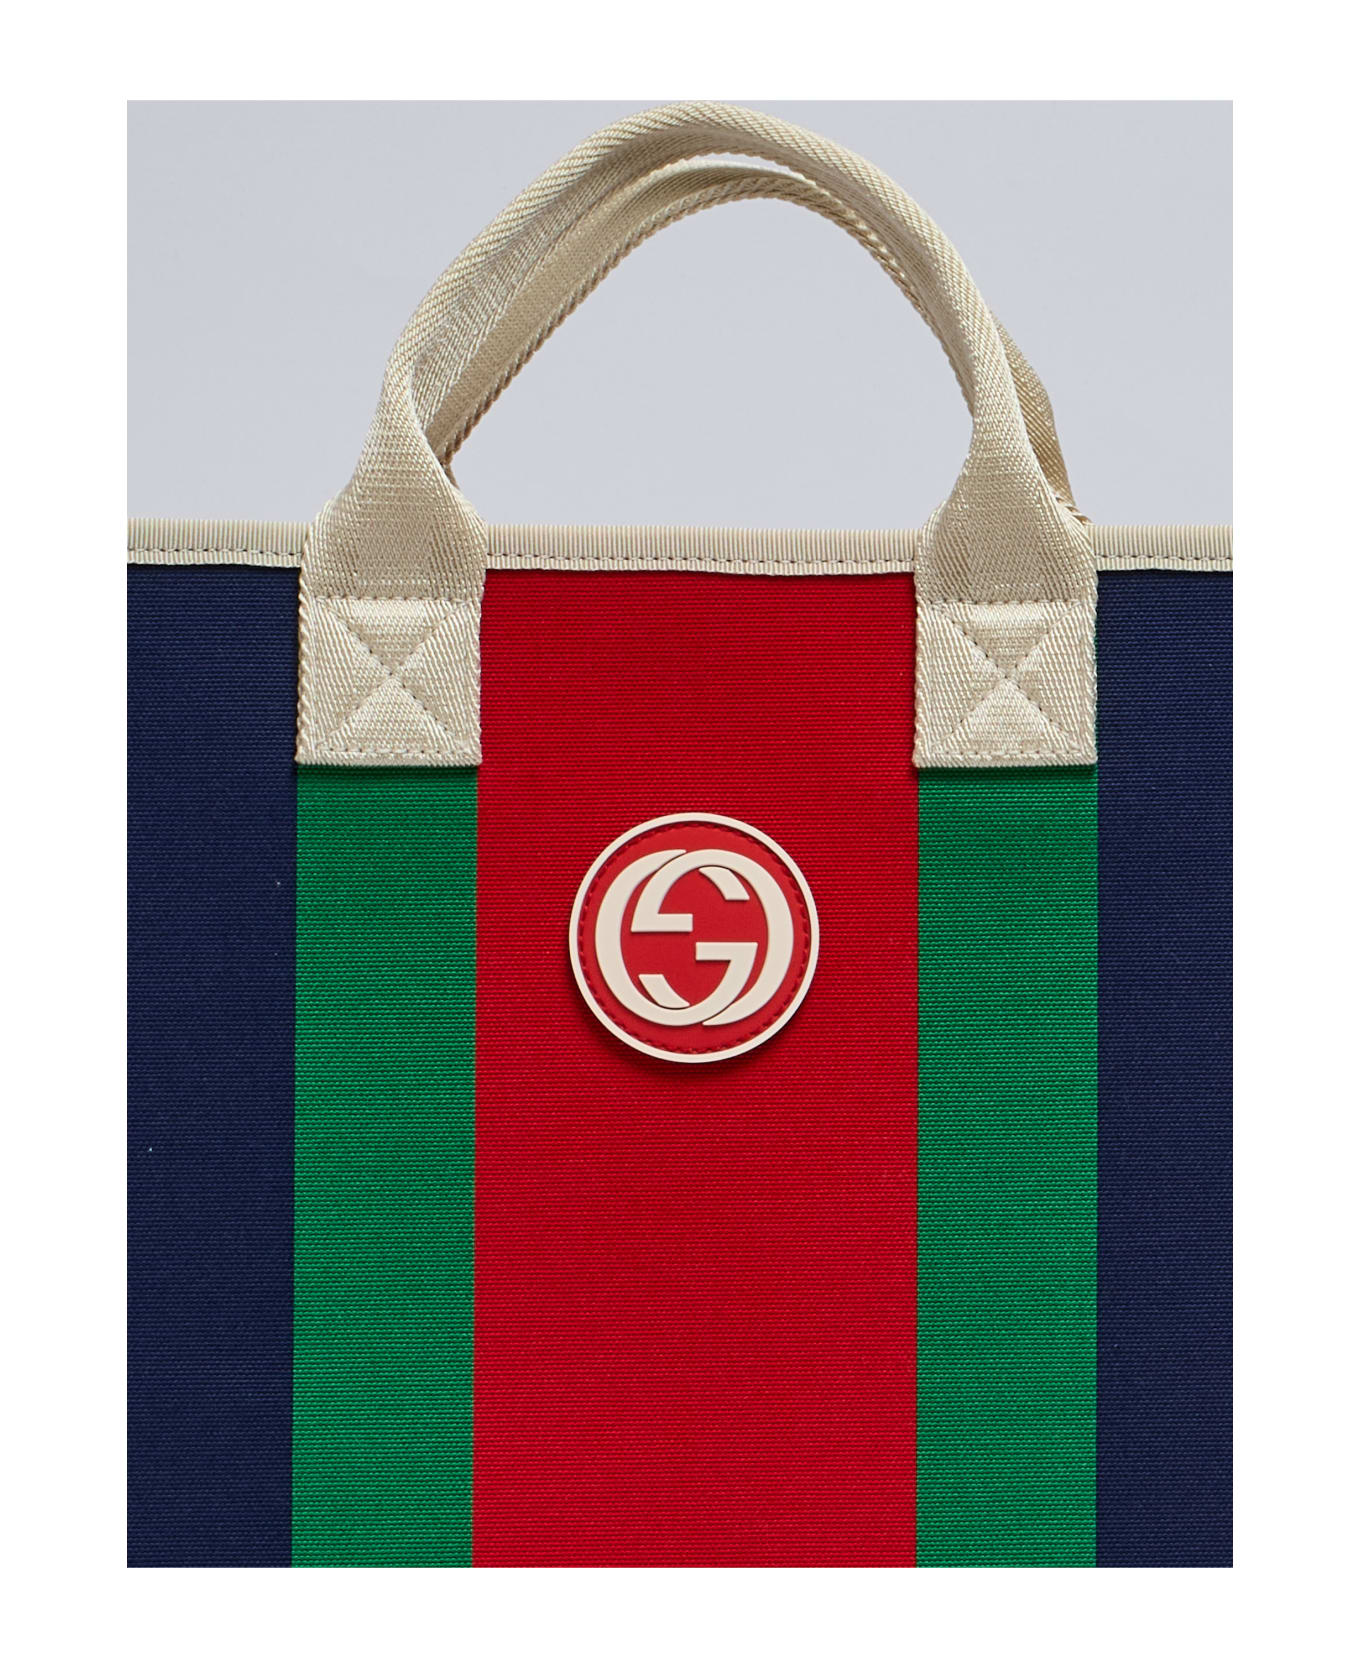 Gucci Handbag Shopping Bag - BLU-VERDE-ROSSO